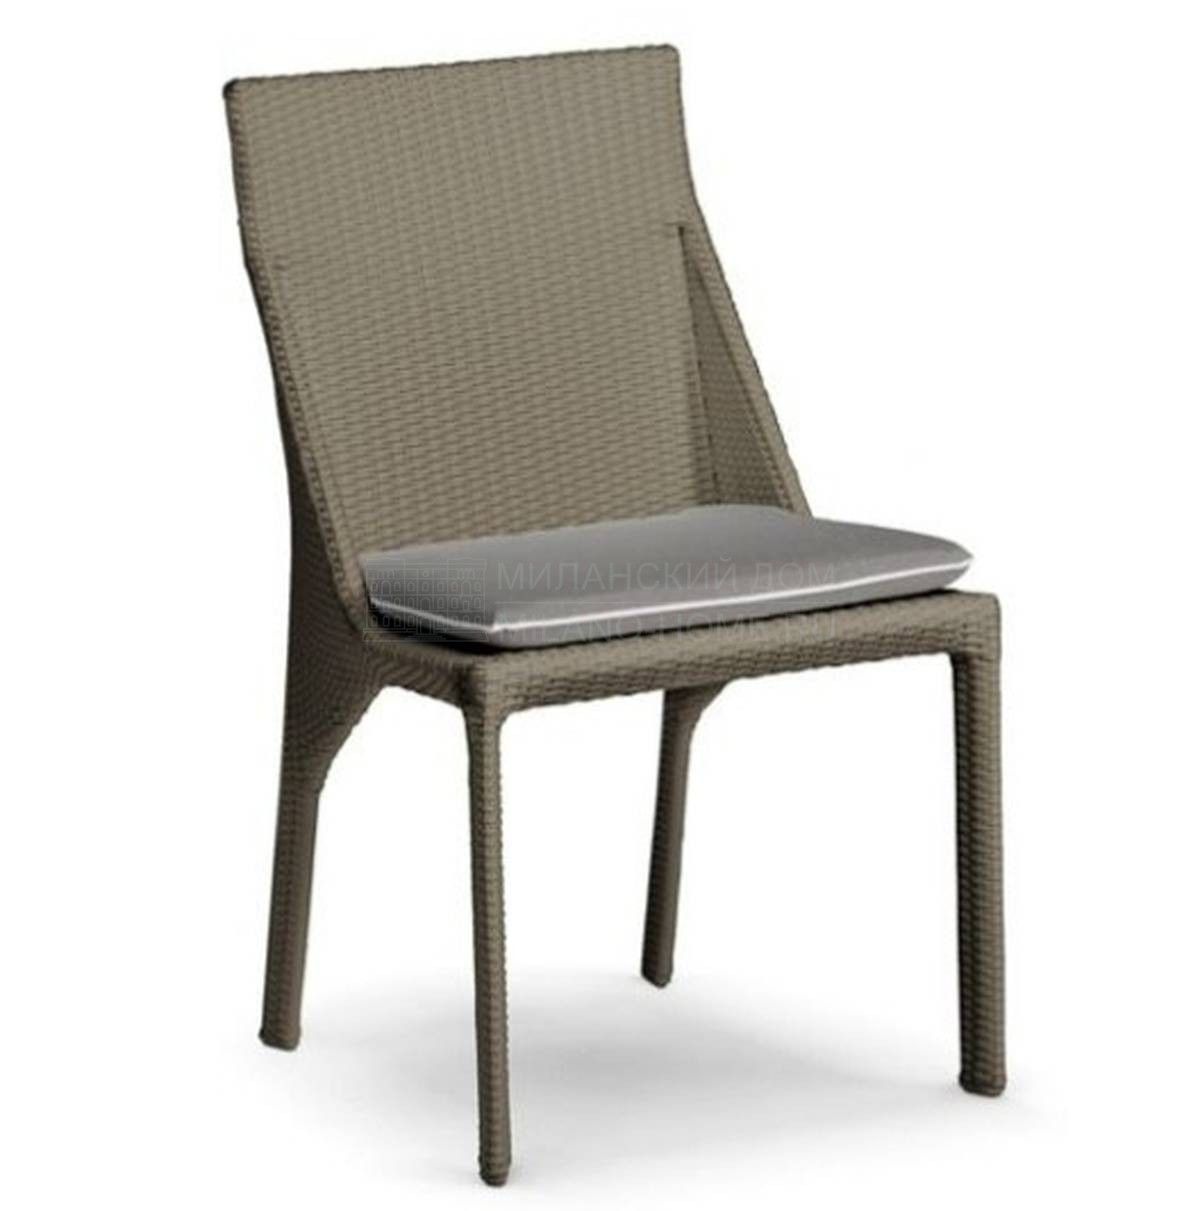 Стул Bel air chair из Франции фабрики ROCHE BOBOIS